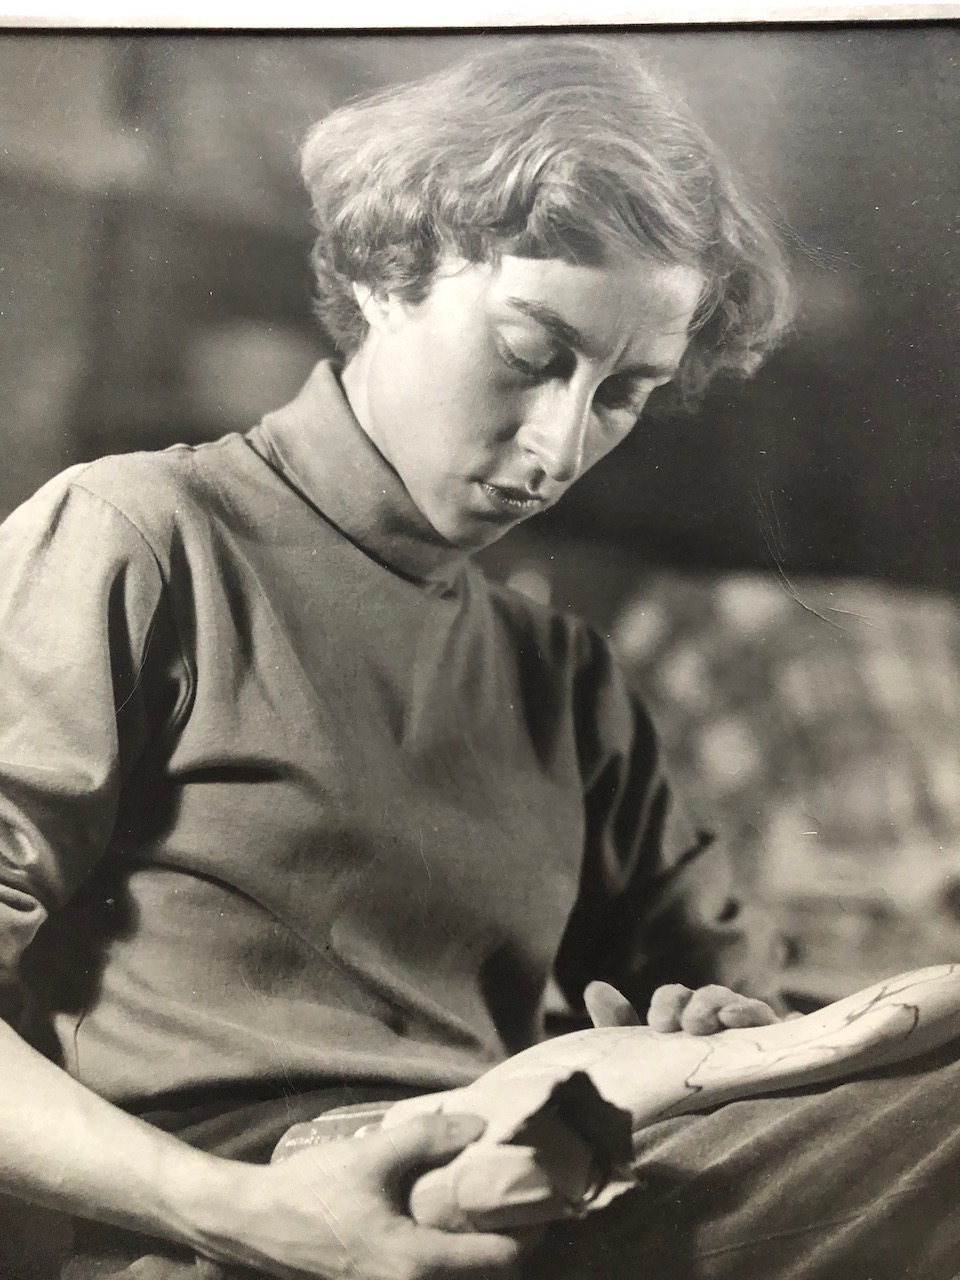 Kreilick at Cranbrook Academy of Art, 1951.